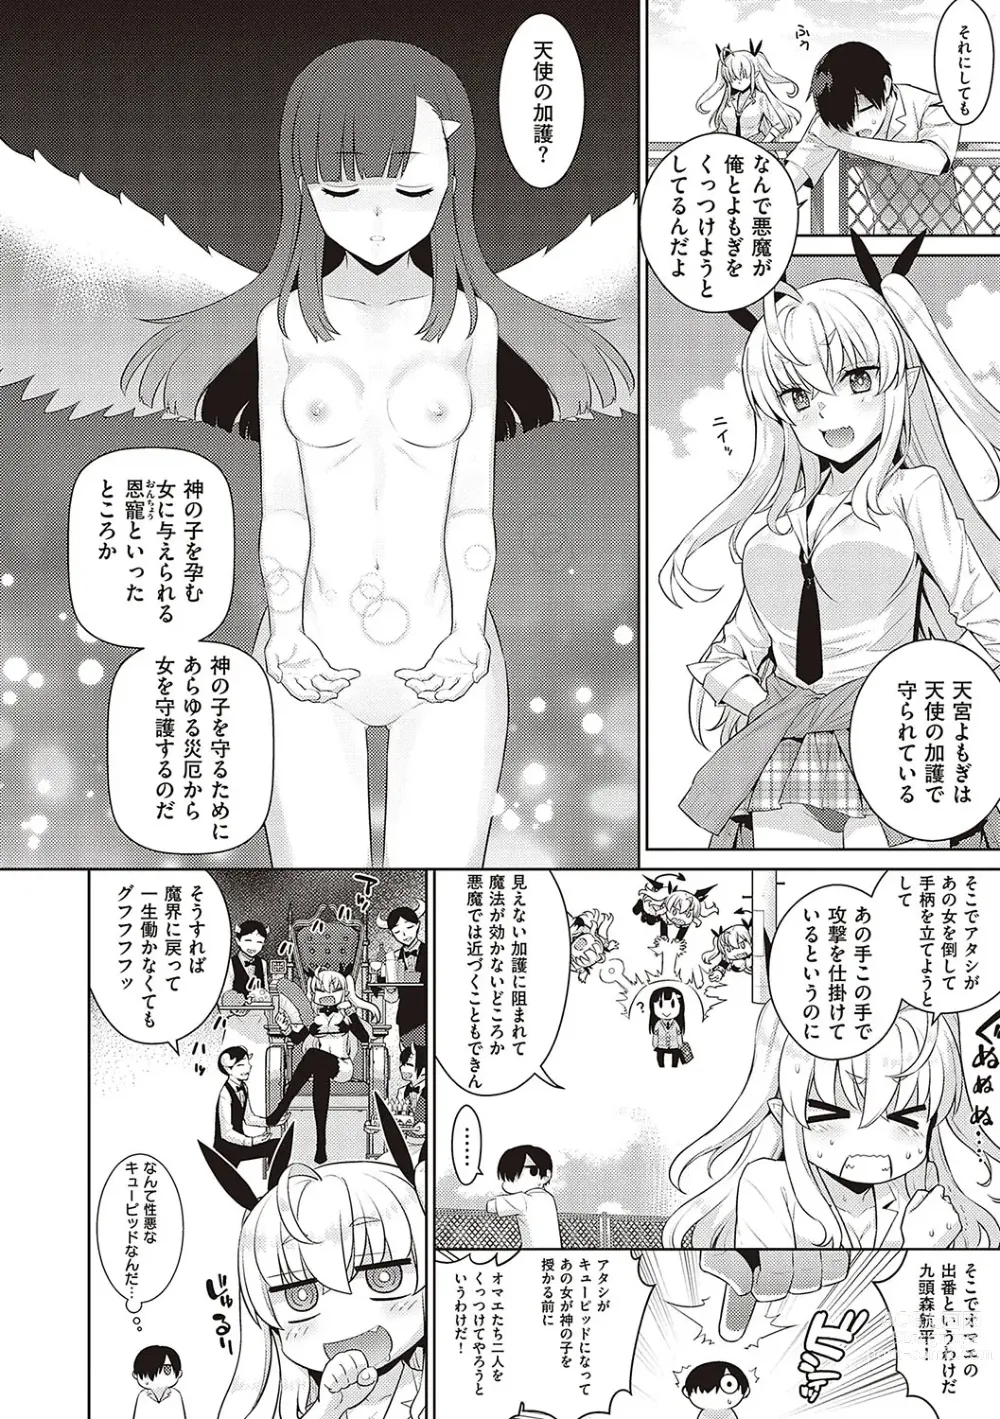 Page 11 of manga KOAKUMA DAISY